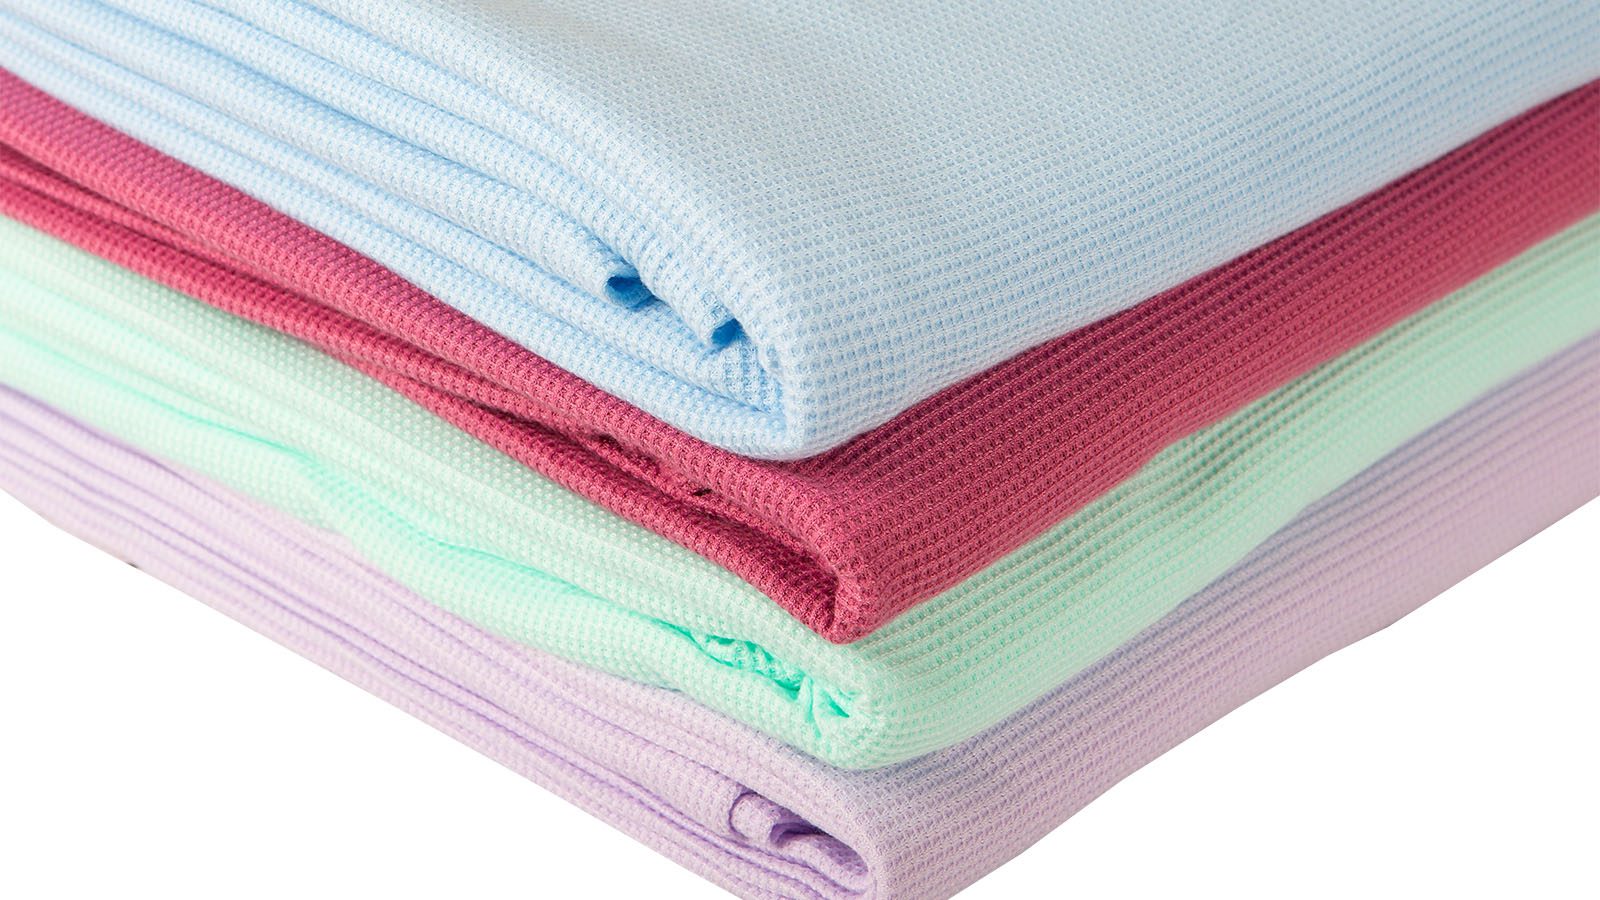 Pile of hospital blankets